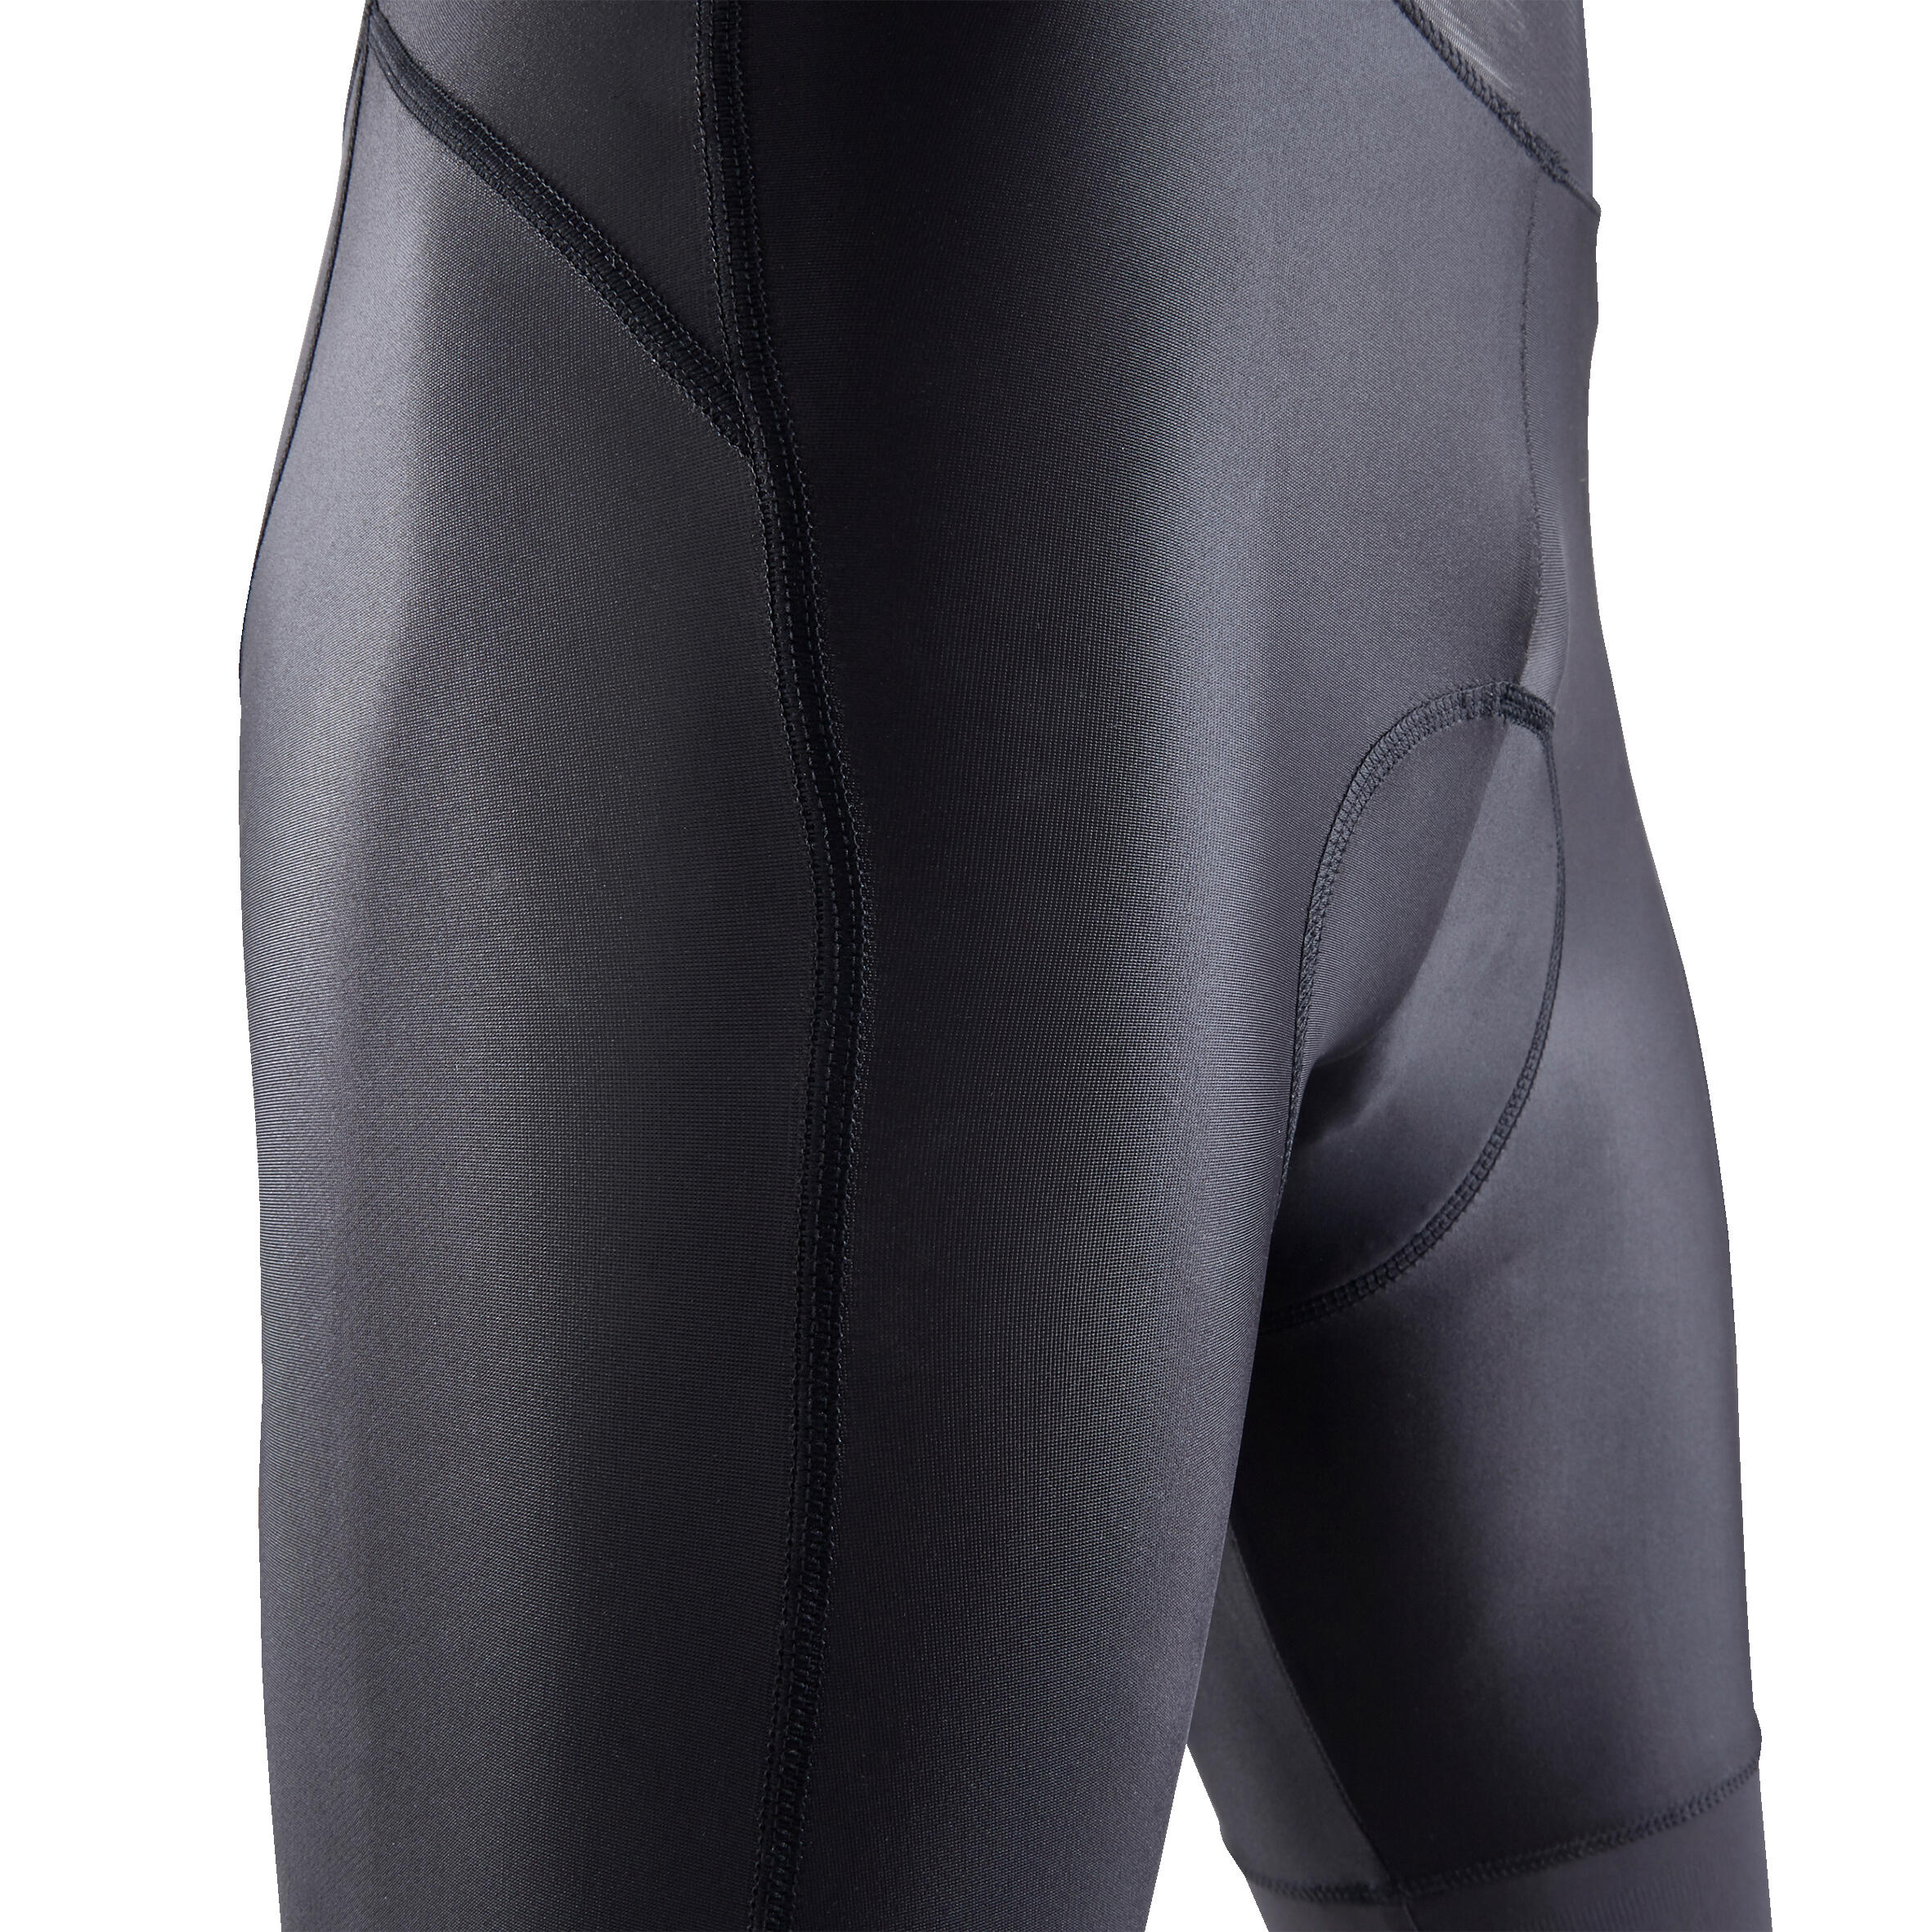 Mountain Bike Shorts XC Light - Ochre 5/16